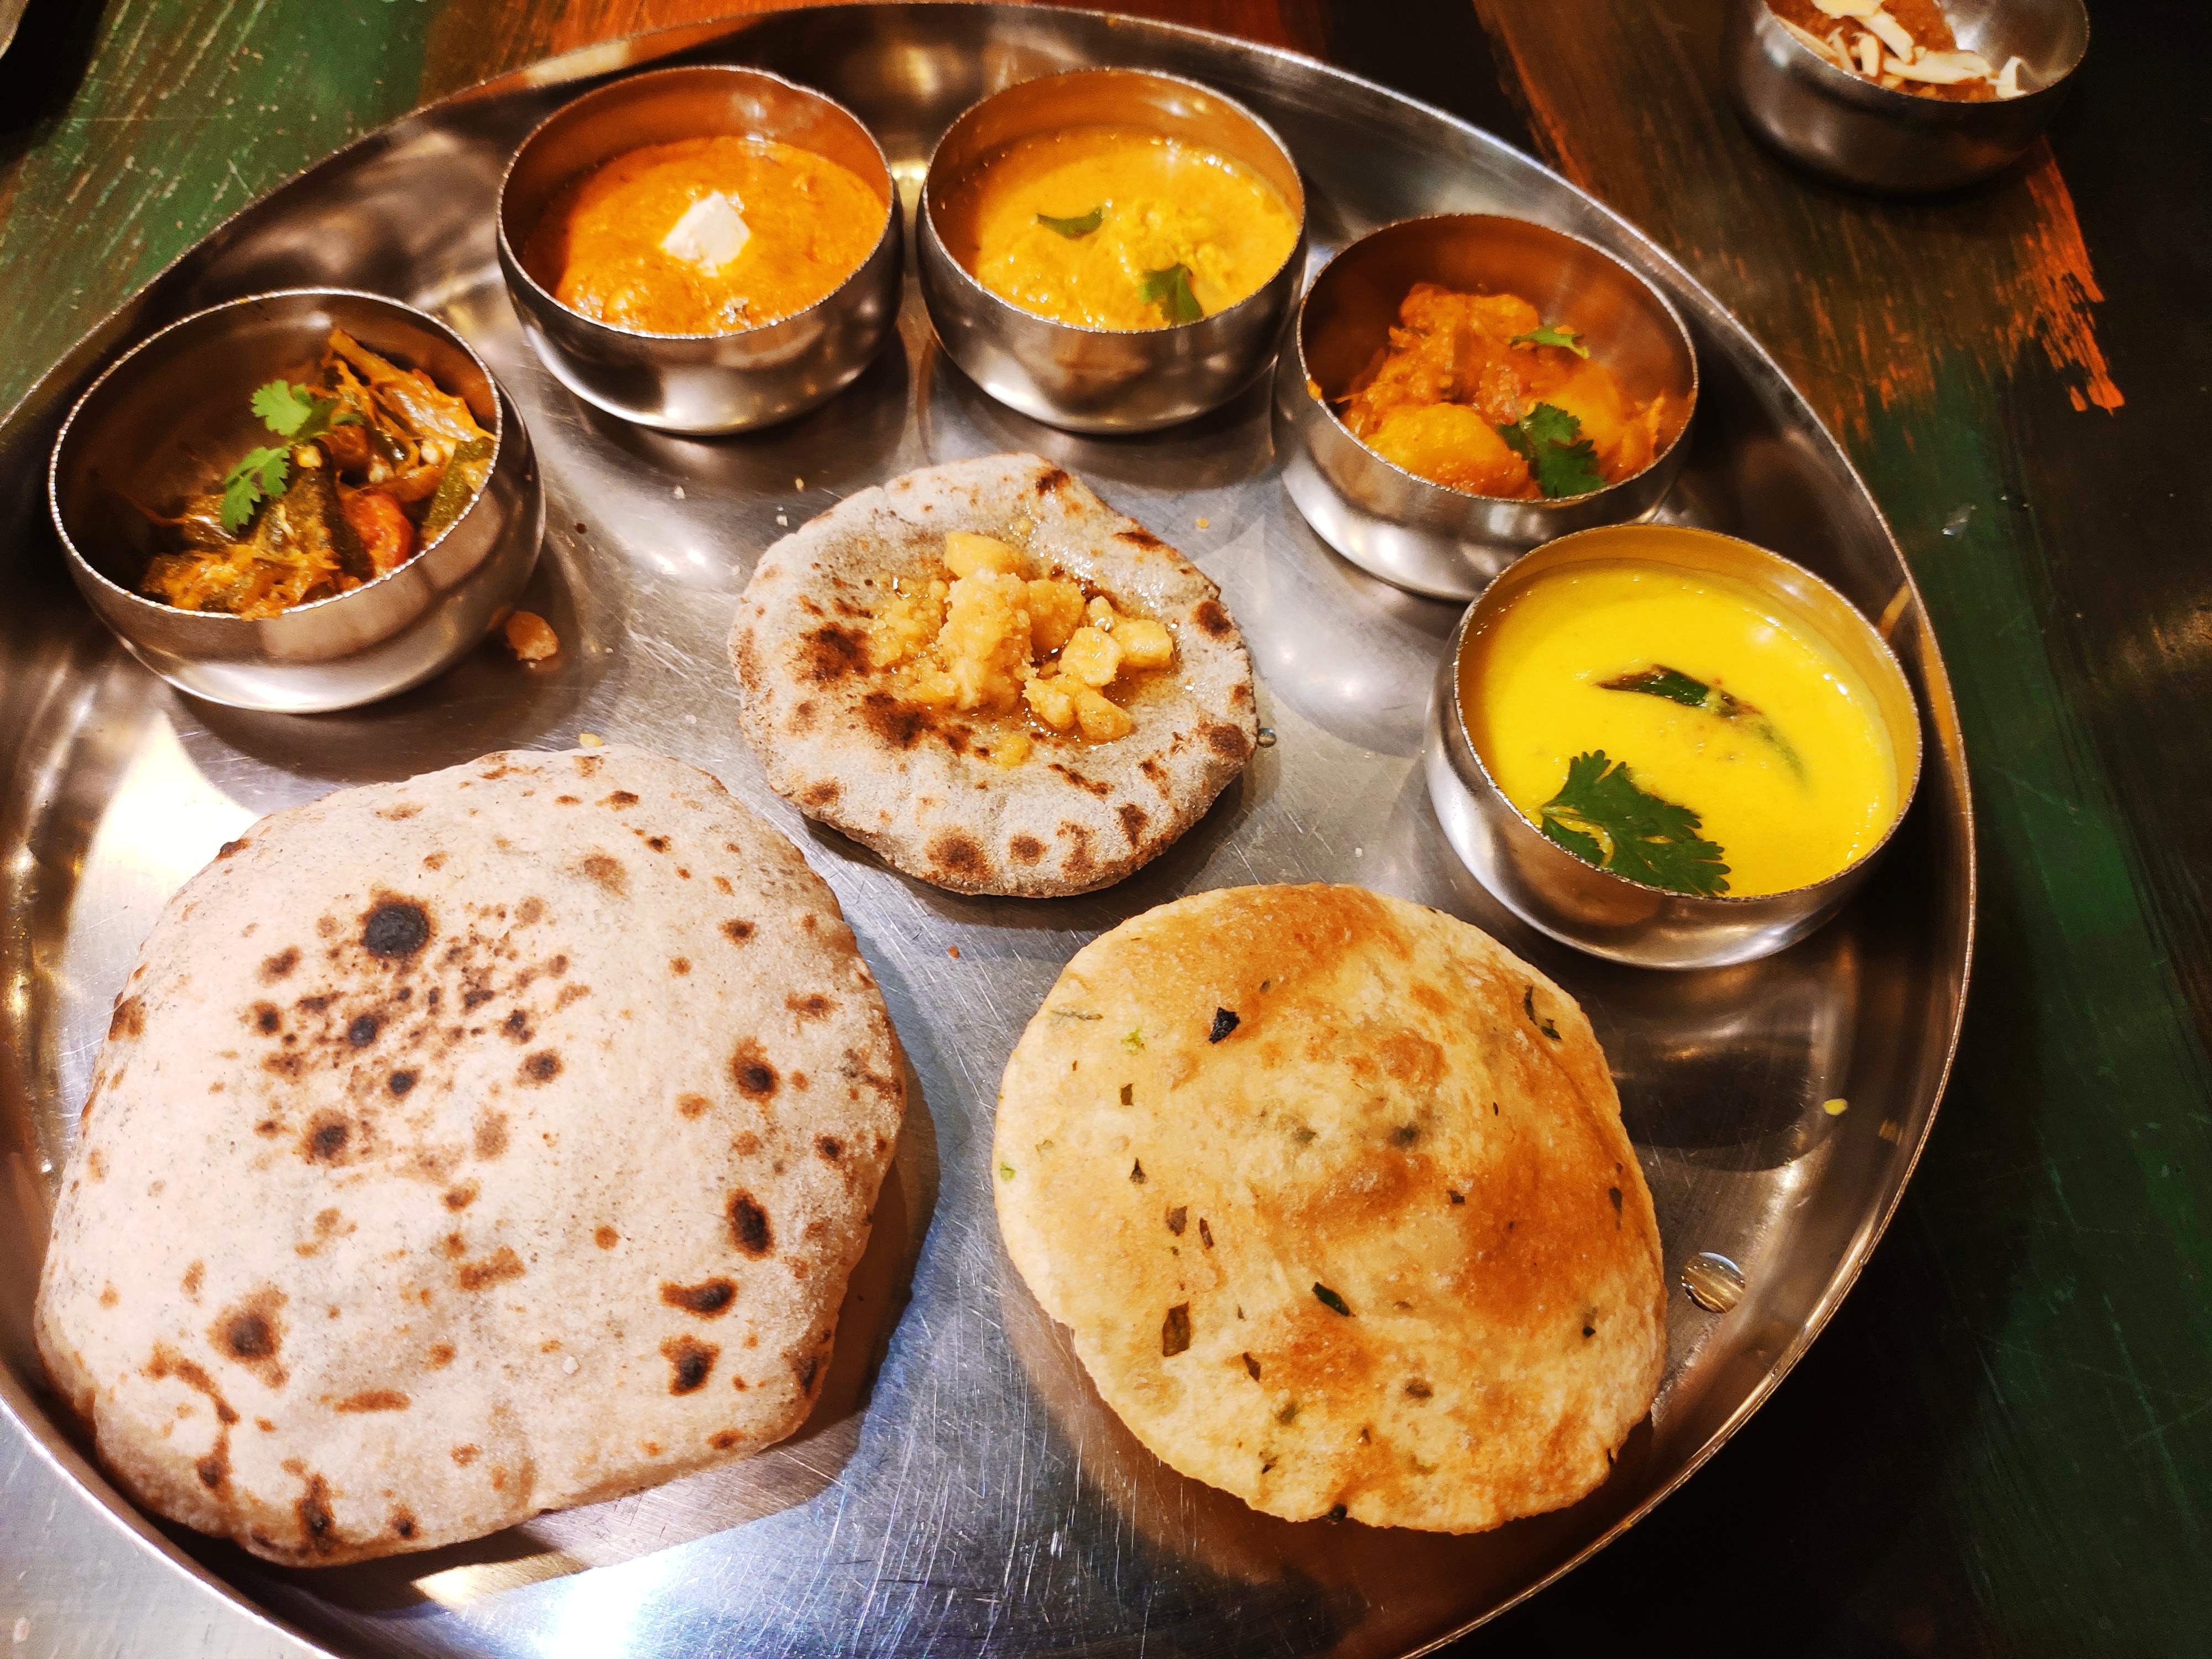 Dish,Food,Cuisine,Ingredient,Meal,Punjabi cuisine,Chapati,Produce,Naan,Indian cuisine